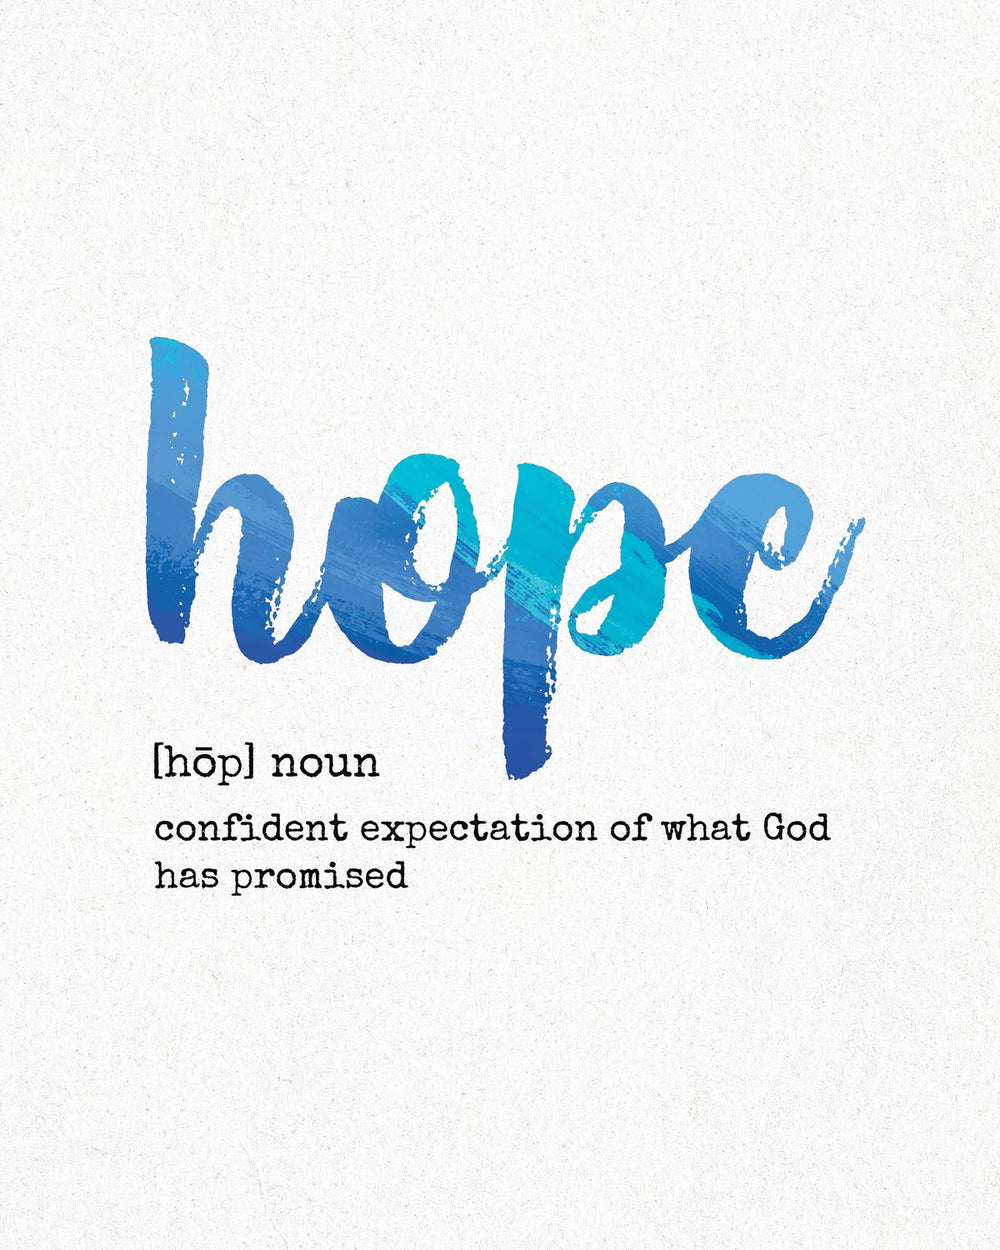 Hope Definition